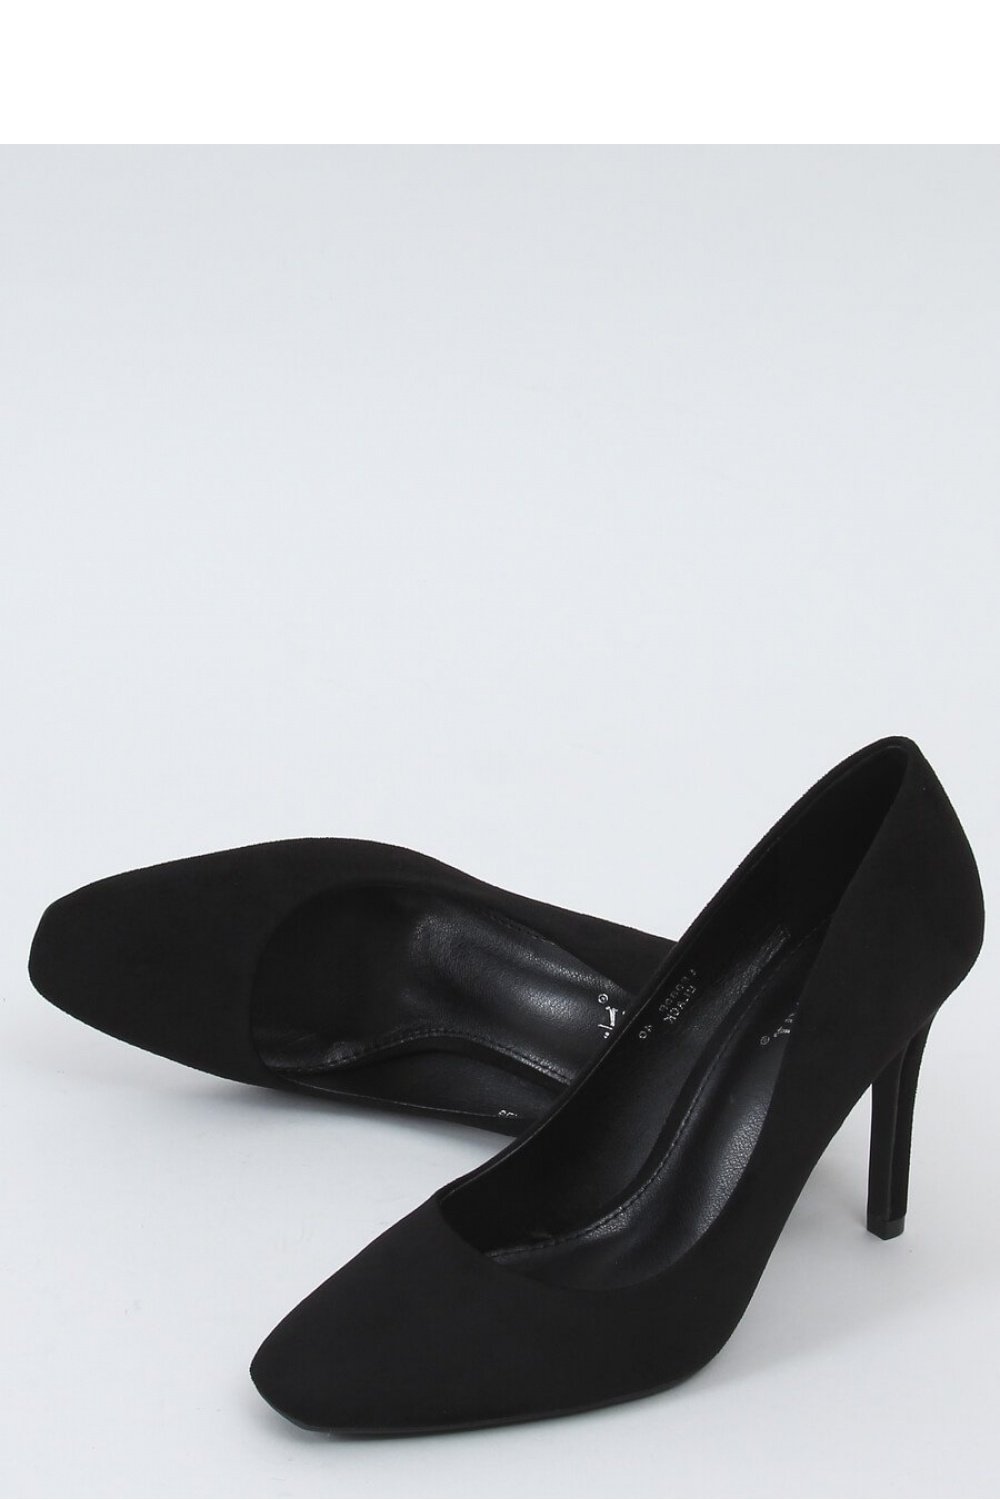 High heels model 153398 Inello Posh Styles Apparel